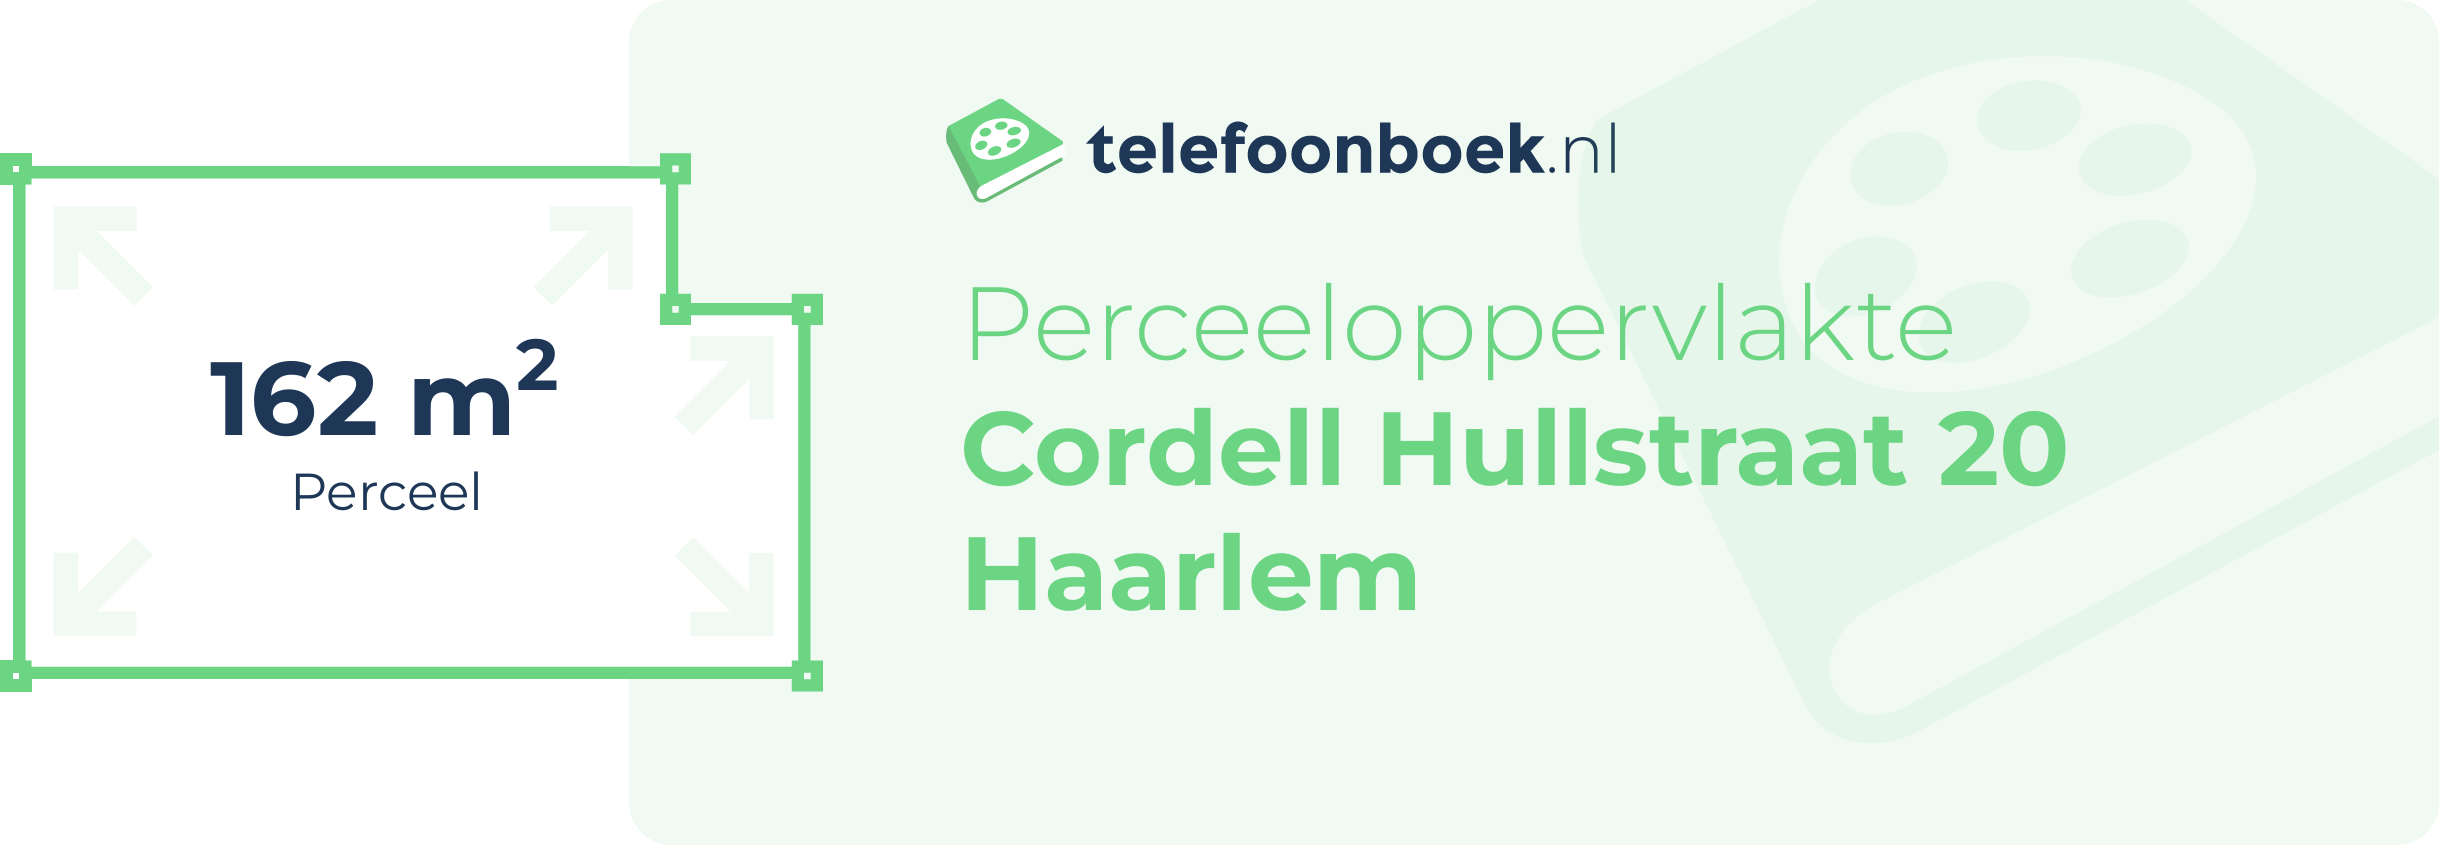 Perceeloppervlakte Cordell Hullstraat 20 Haarlem